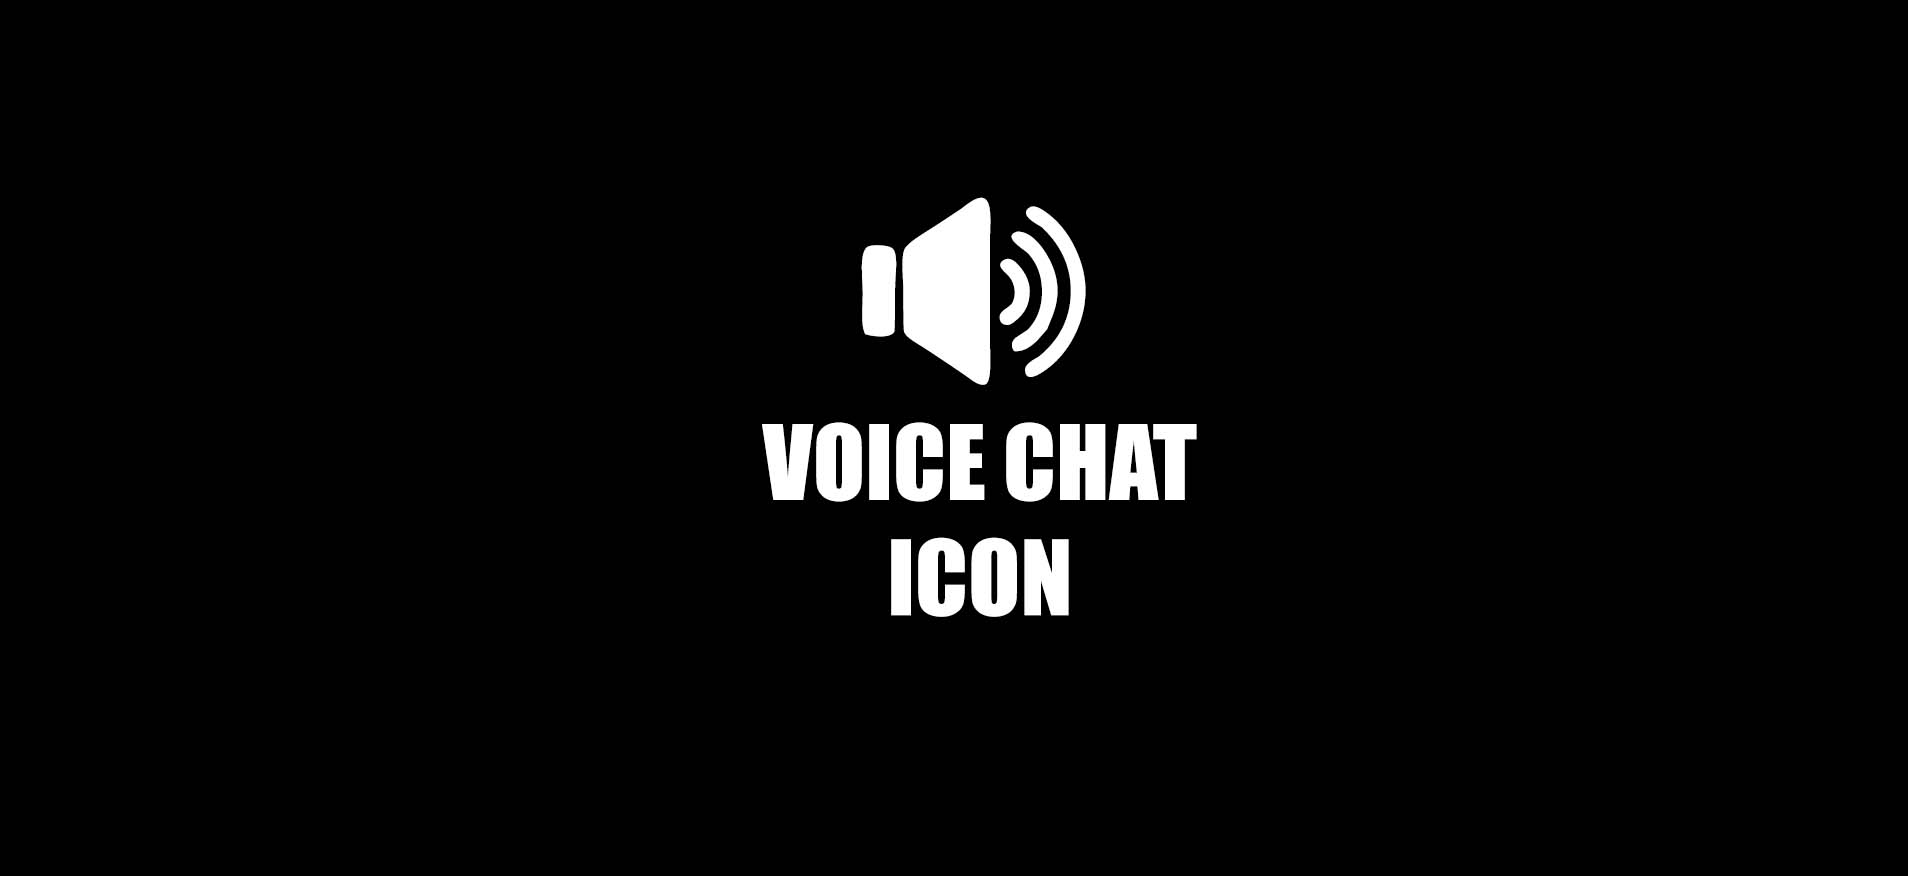 Voice 1.19 2. Голосовой чат. Голосовой чат дота. Иконка голосового чата. Значок Voice chat.